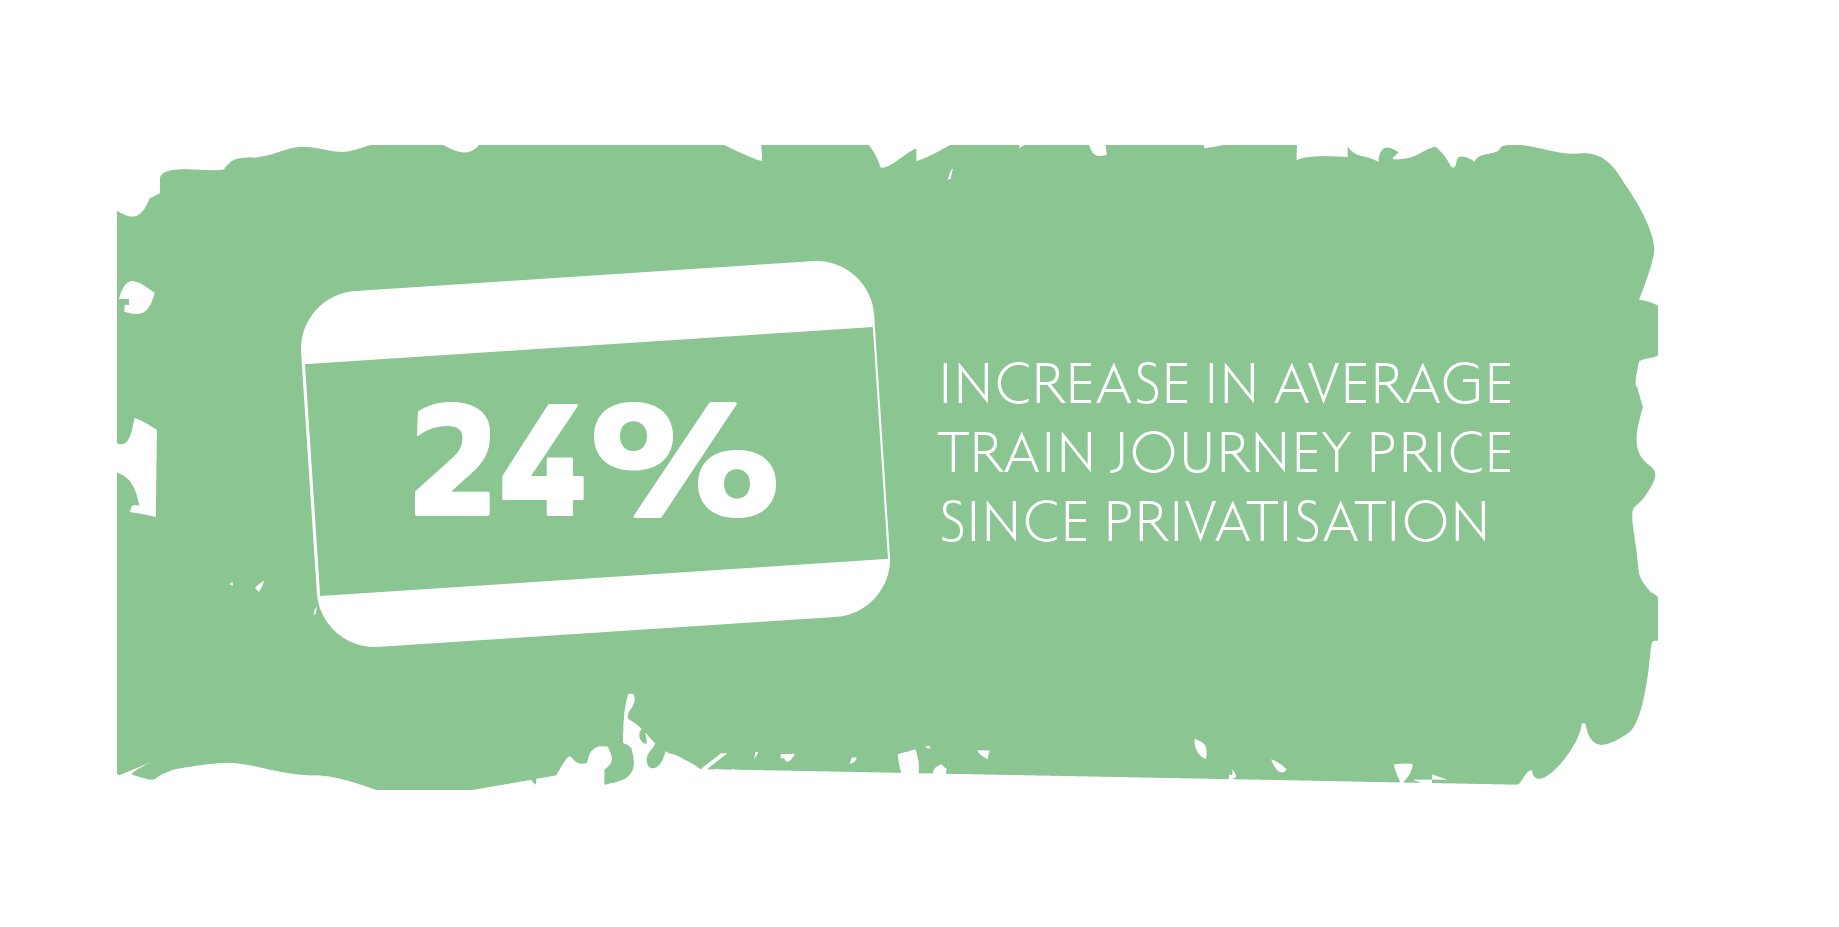 24% increase in train journey price